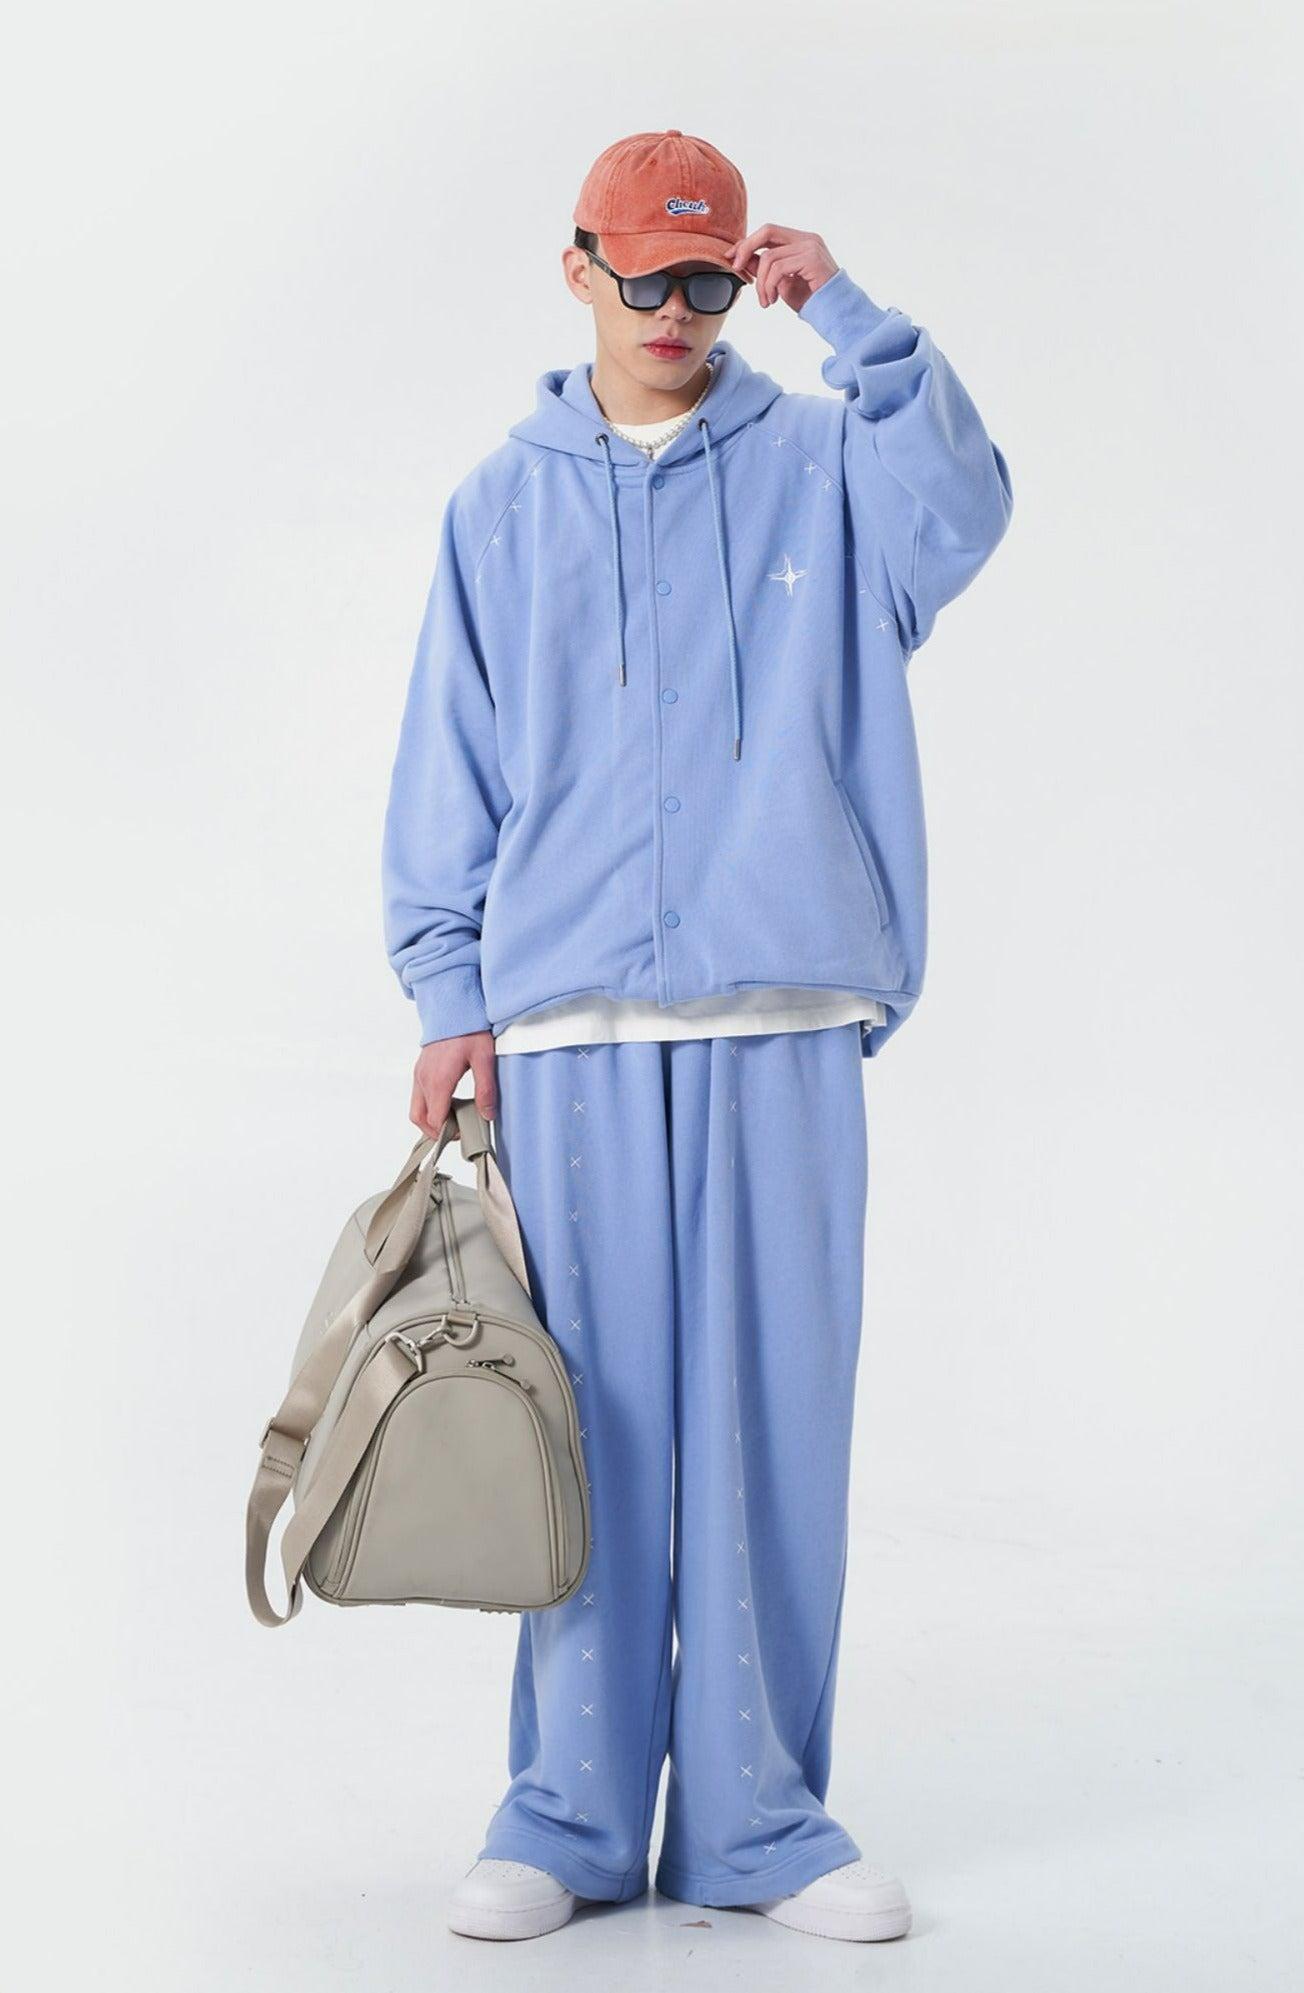 Casual Stars Pattern Drawstring Hoodie & Pants Set Korean Street Fashion Clothing Set By New Start Shop Online at OH Vault